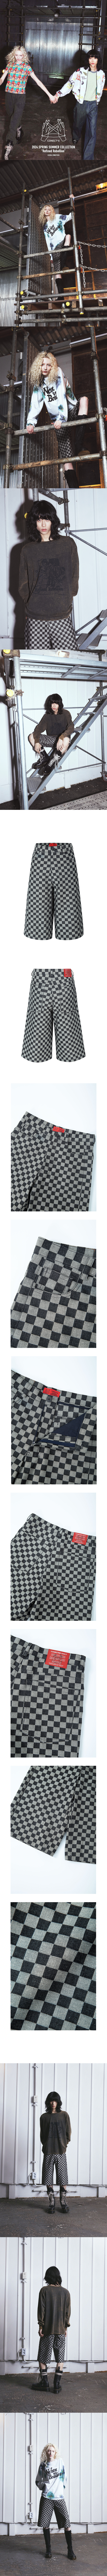 Checkered Cotton Pants